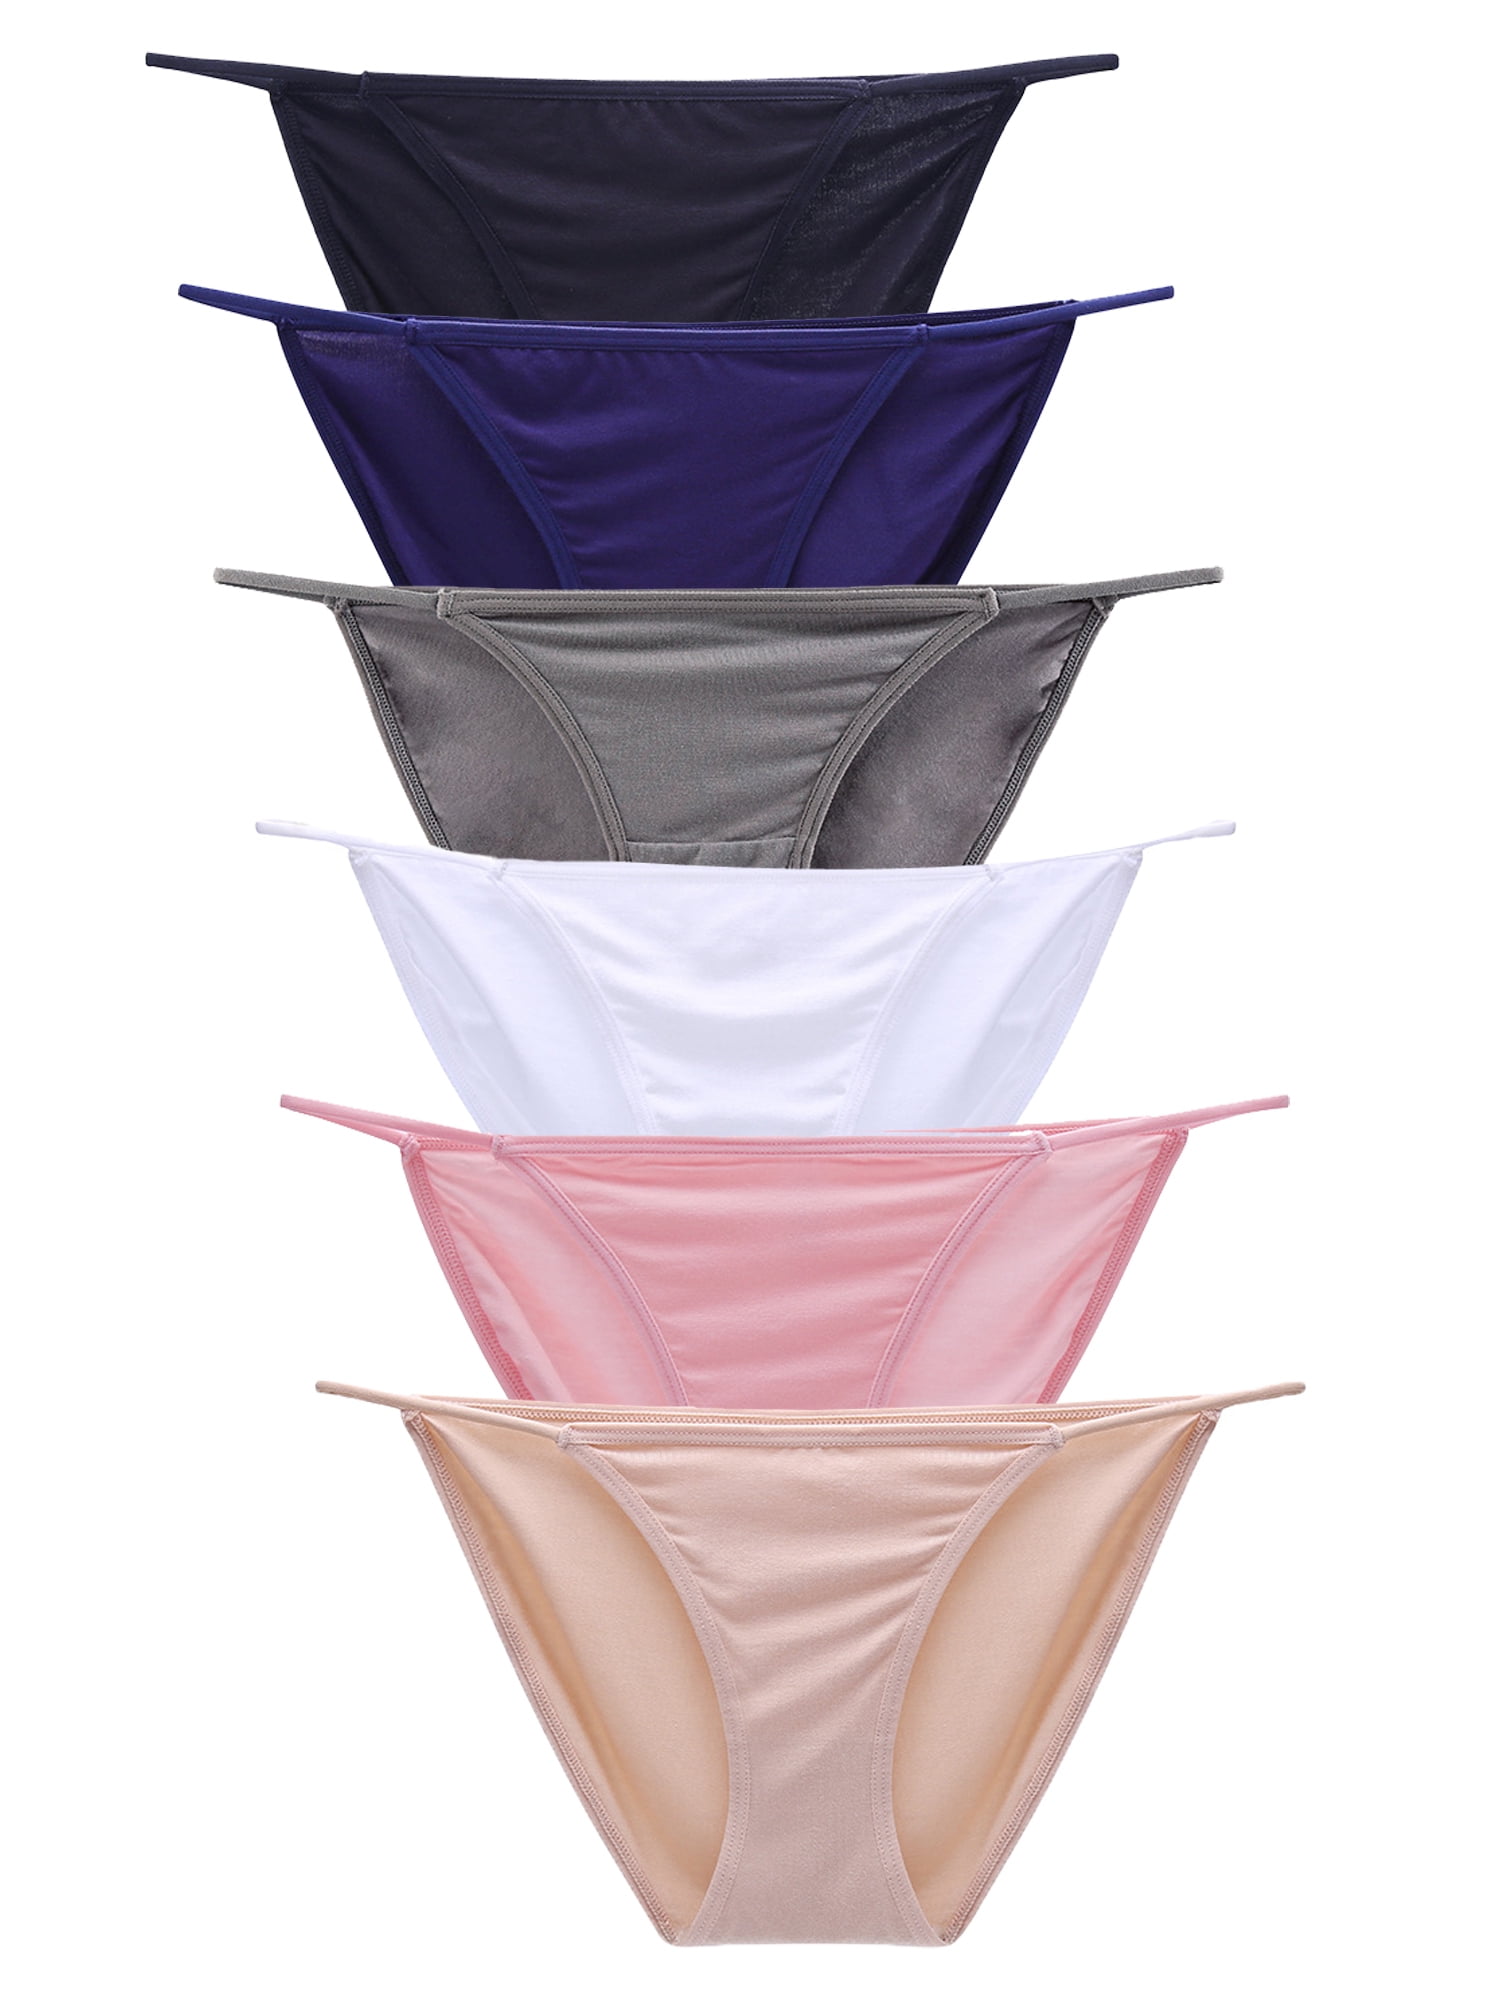 3/6 Women's Sexy No Show Silky Bikini knickers Panties Briefs Lingerie  Underwear